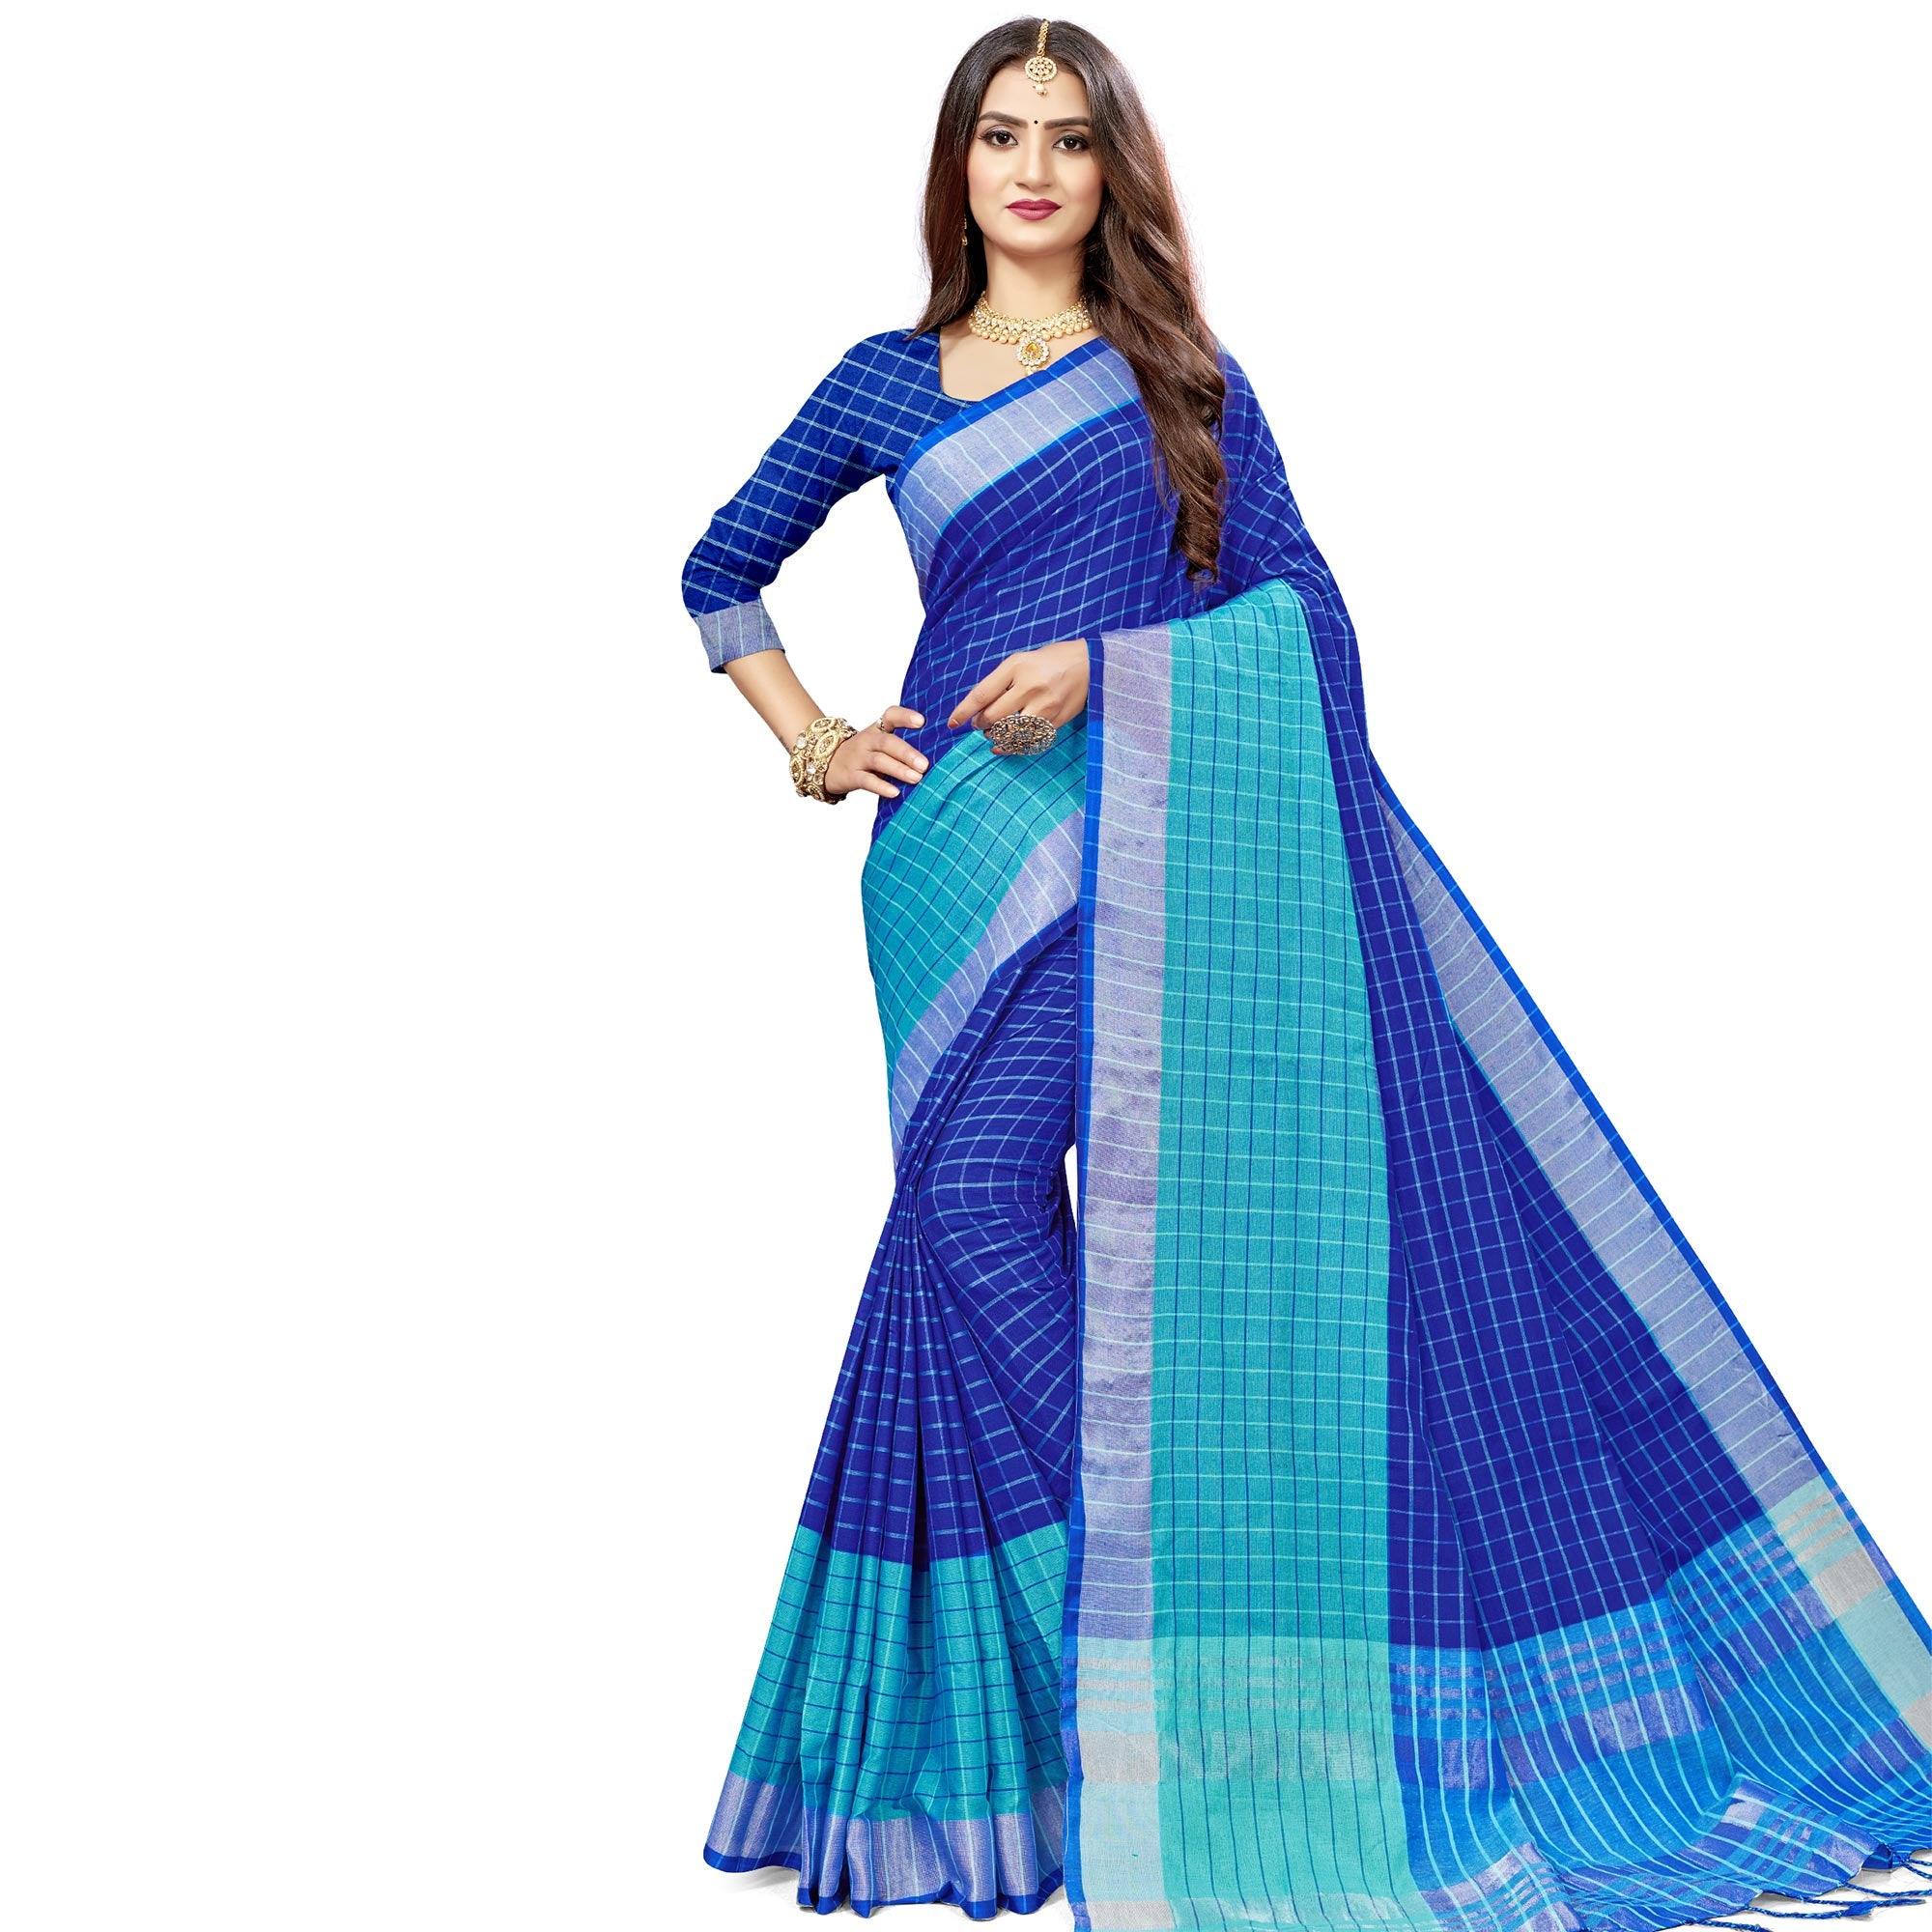 Charming Blue Colored Fesive Wear Checks Print Cotton Silk Saree With Tassels - Peachmode